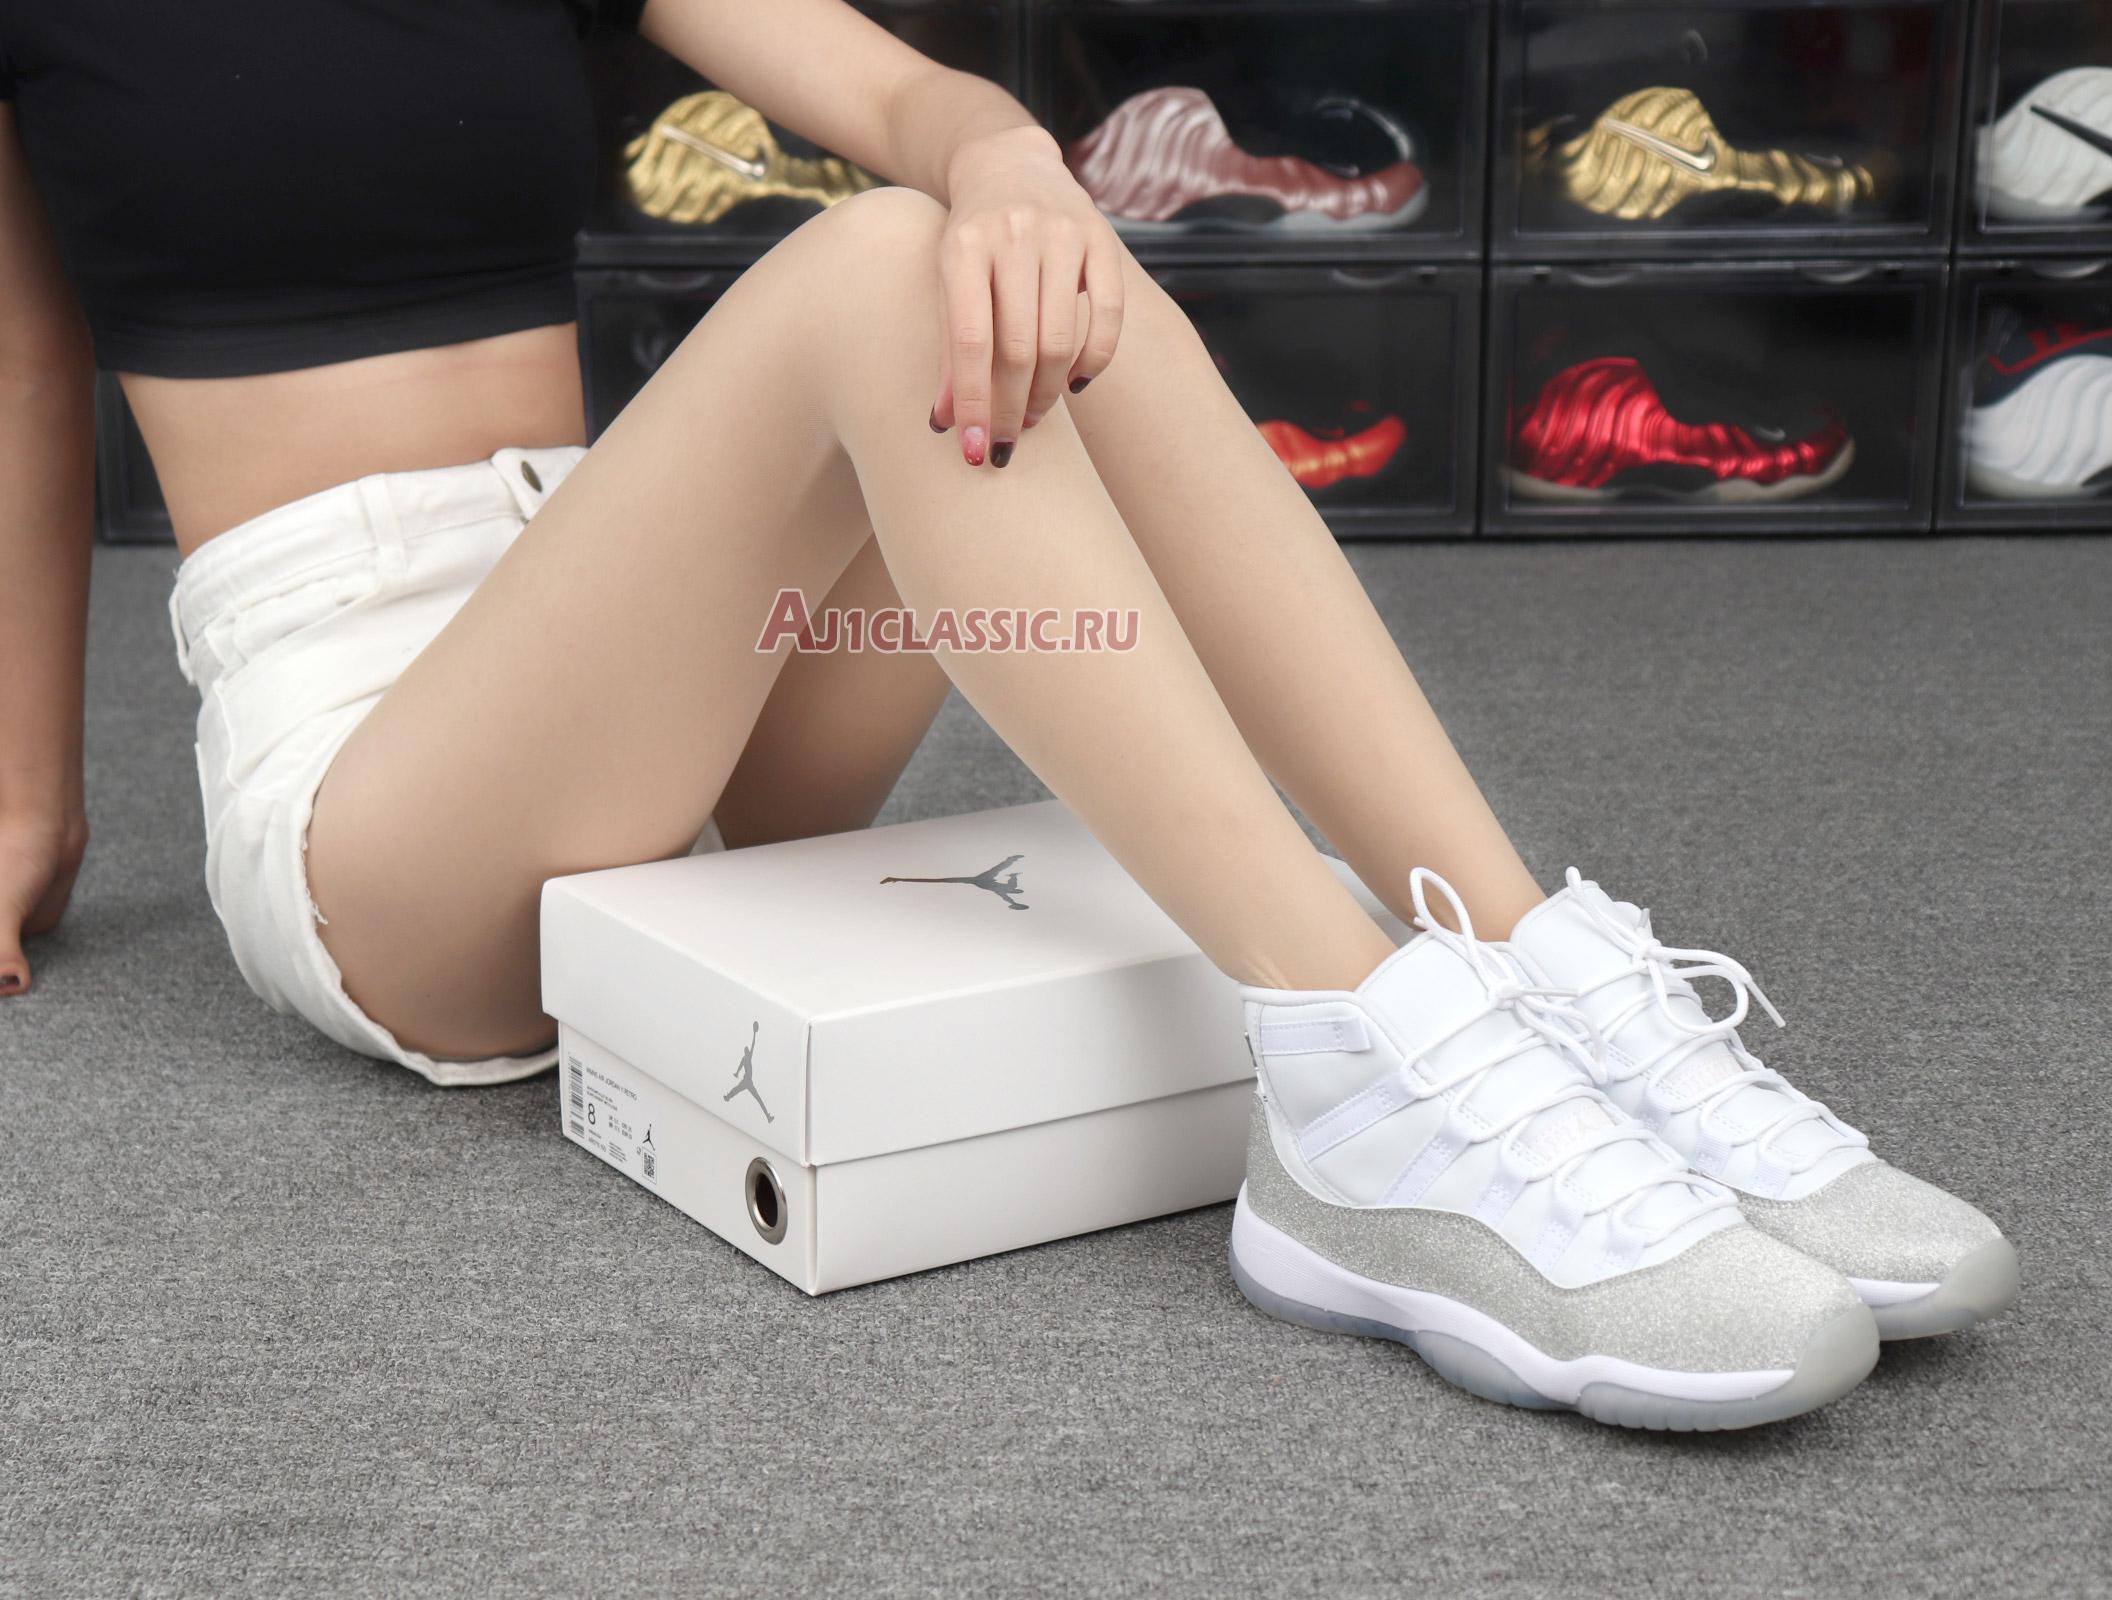 Wmns Air Jordan 11 Retro Vast Grey AR0715-100 White/Metallic Silver-Vast Grey Sneakers